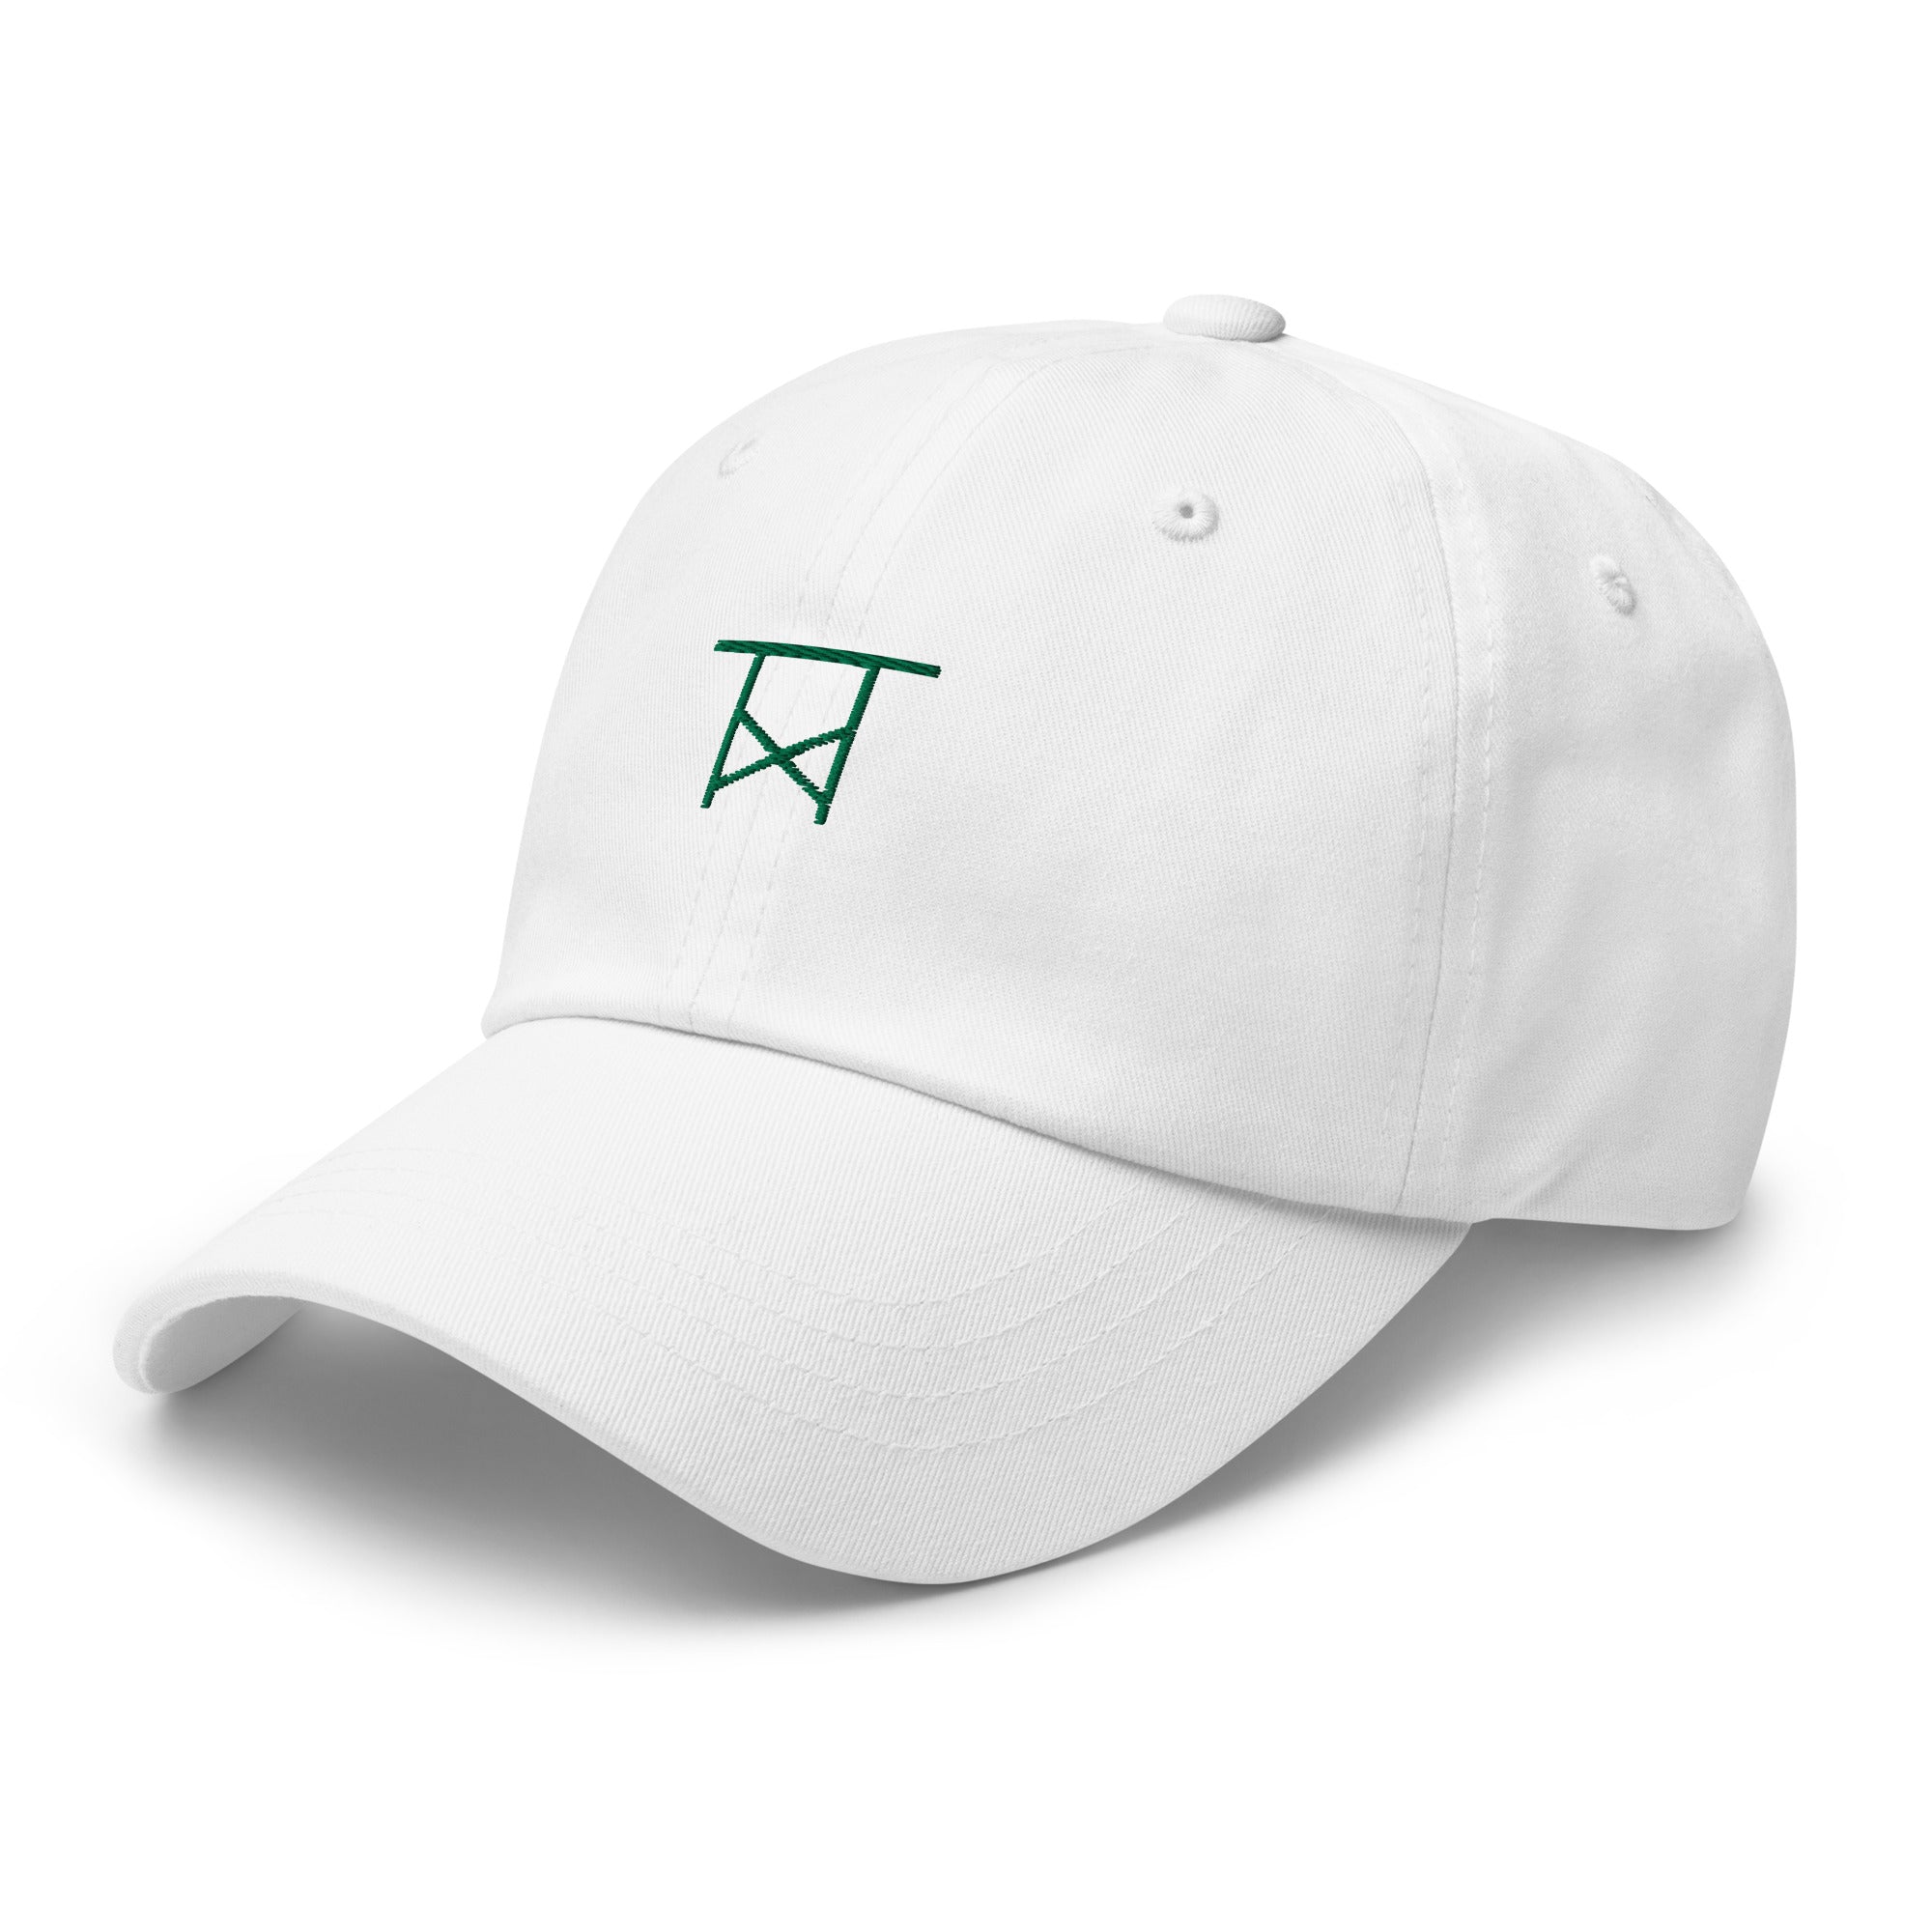 Ranch Brand Twill Cap